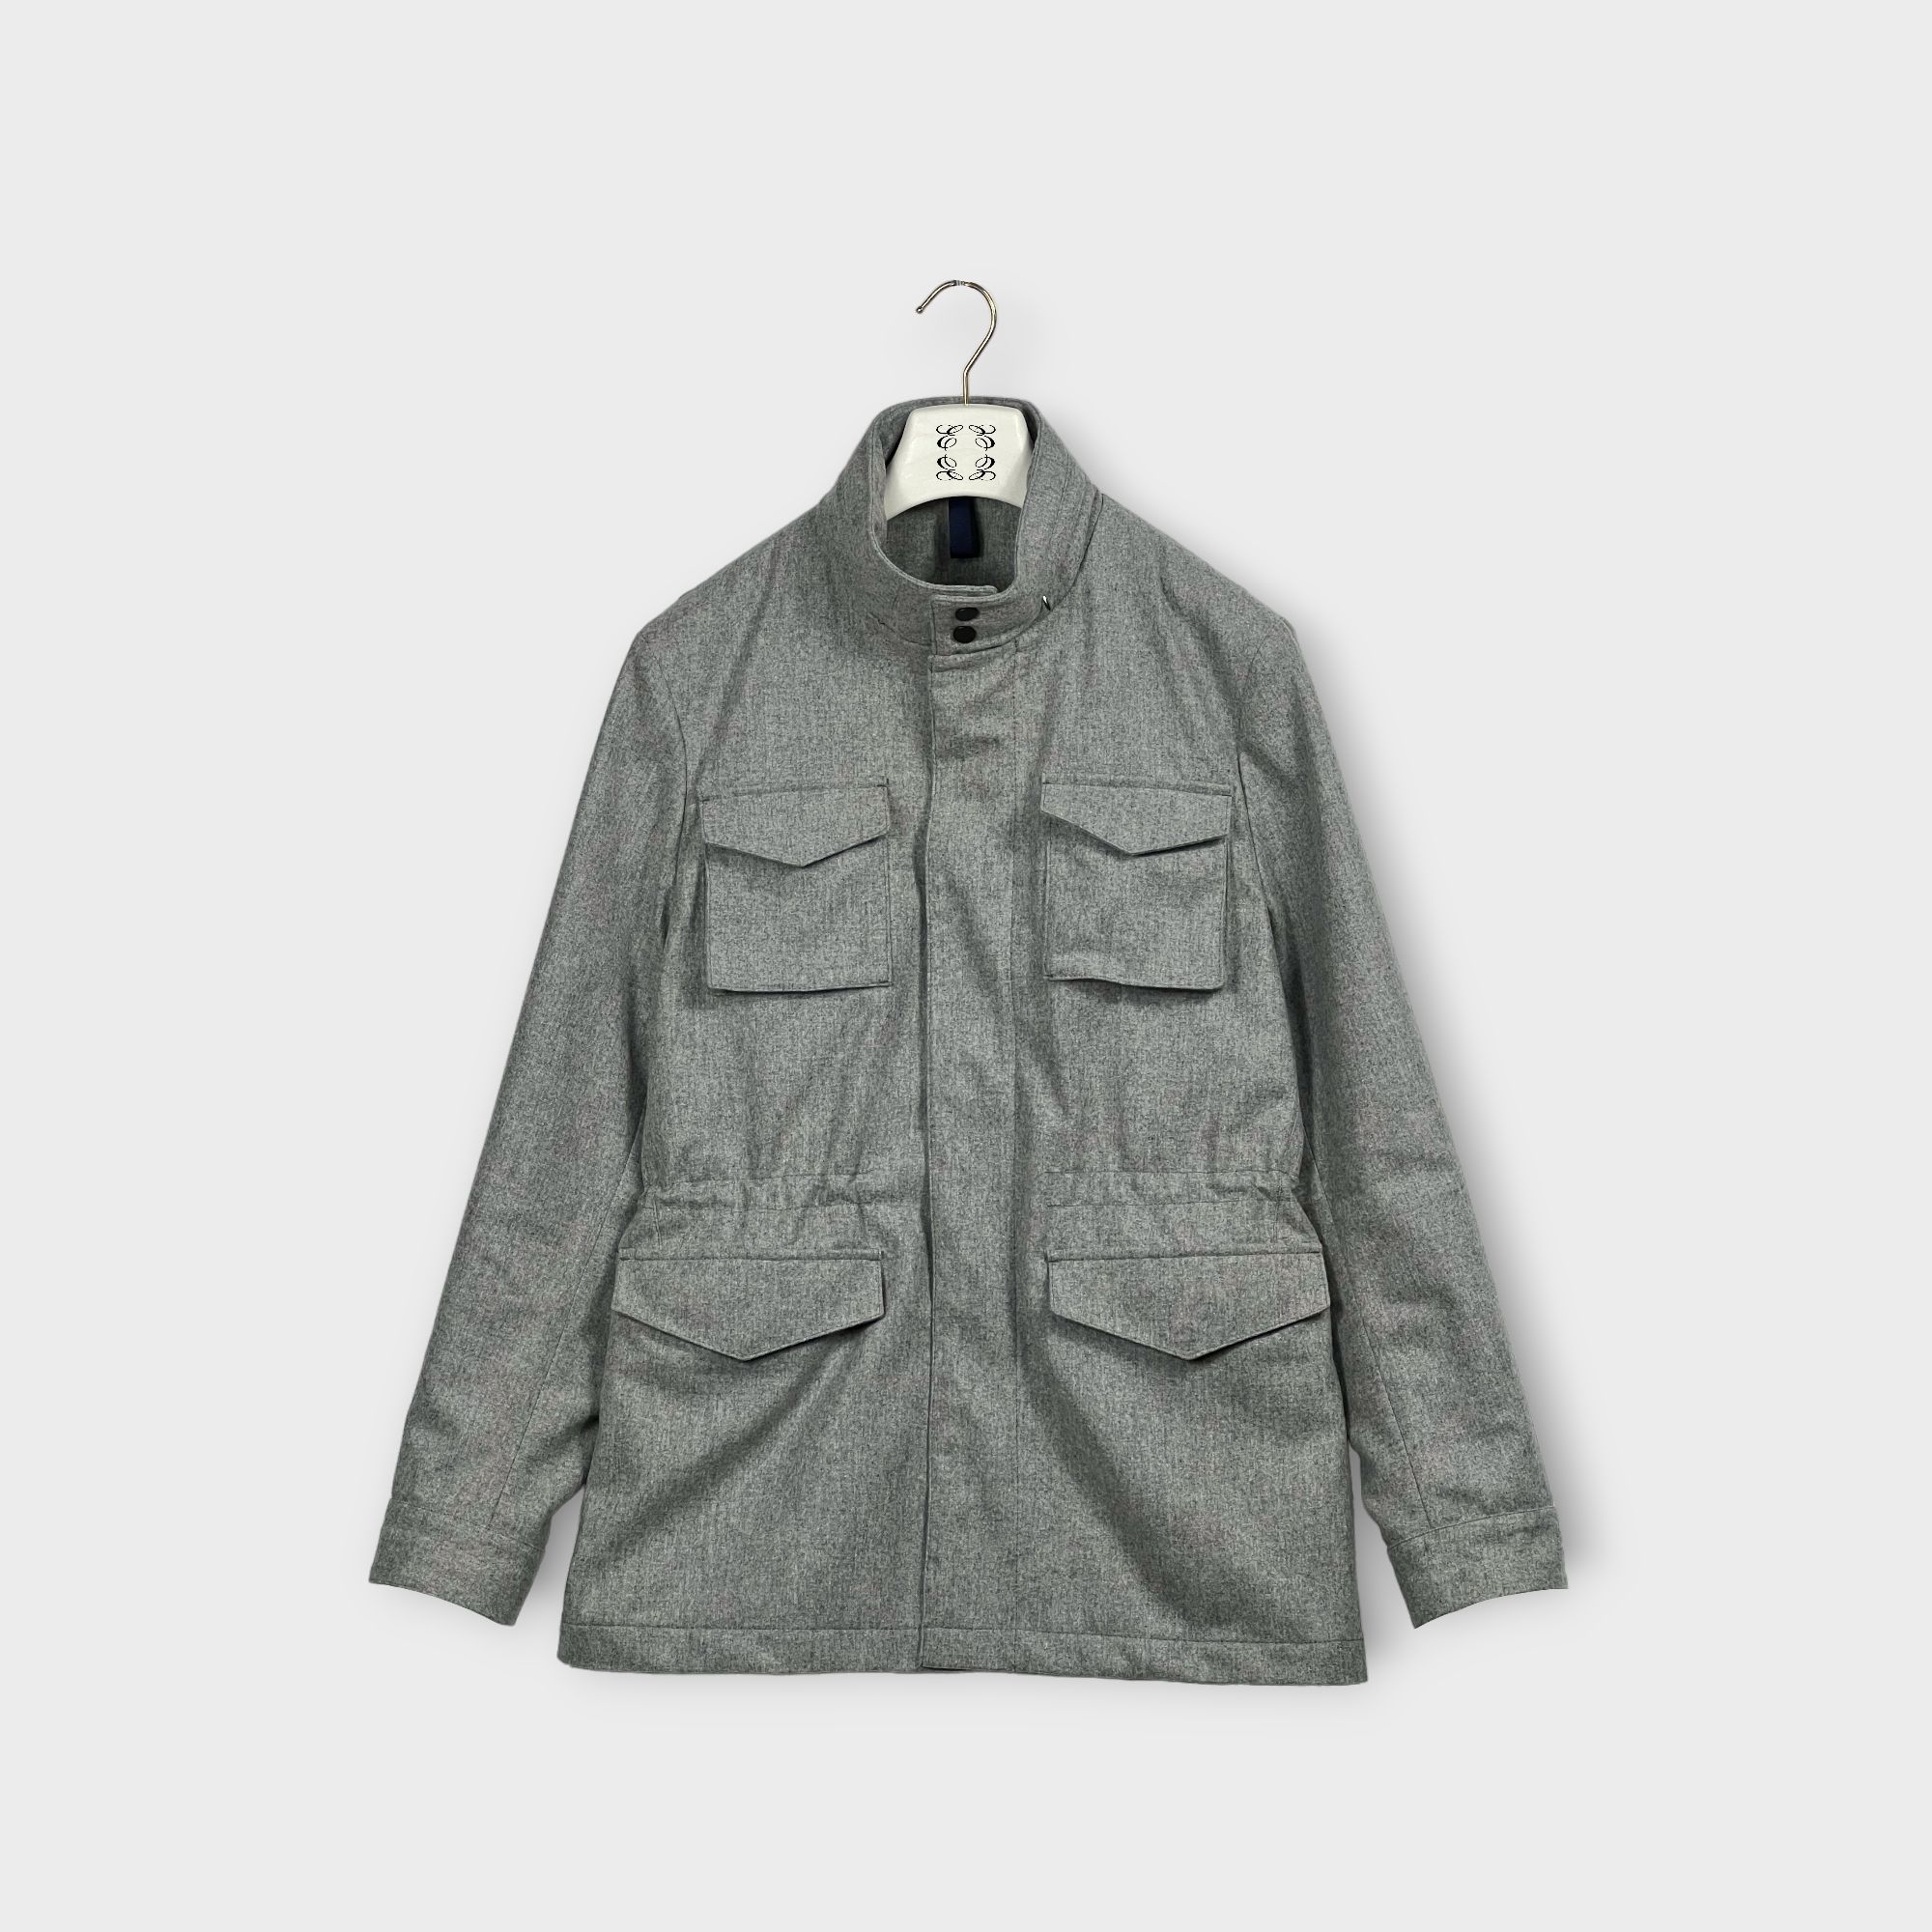 images/virtuemart/product/EREDI PISCOPO Field jacket da uomo in lana impermeabile colore grigio 1.jpg